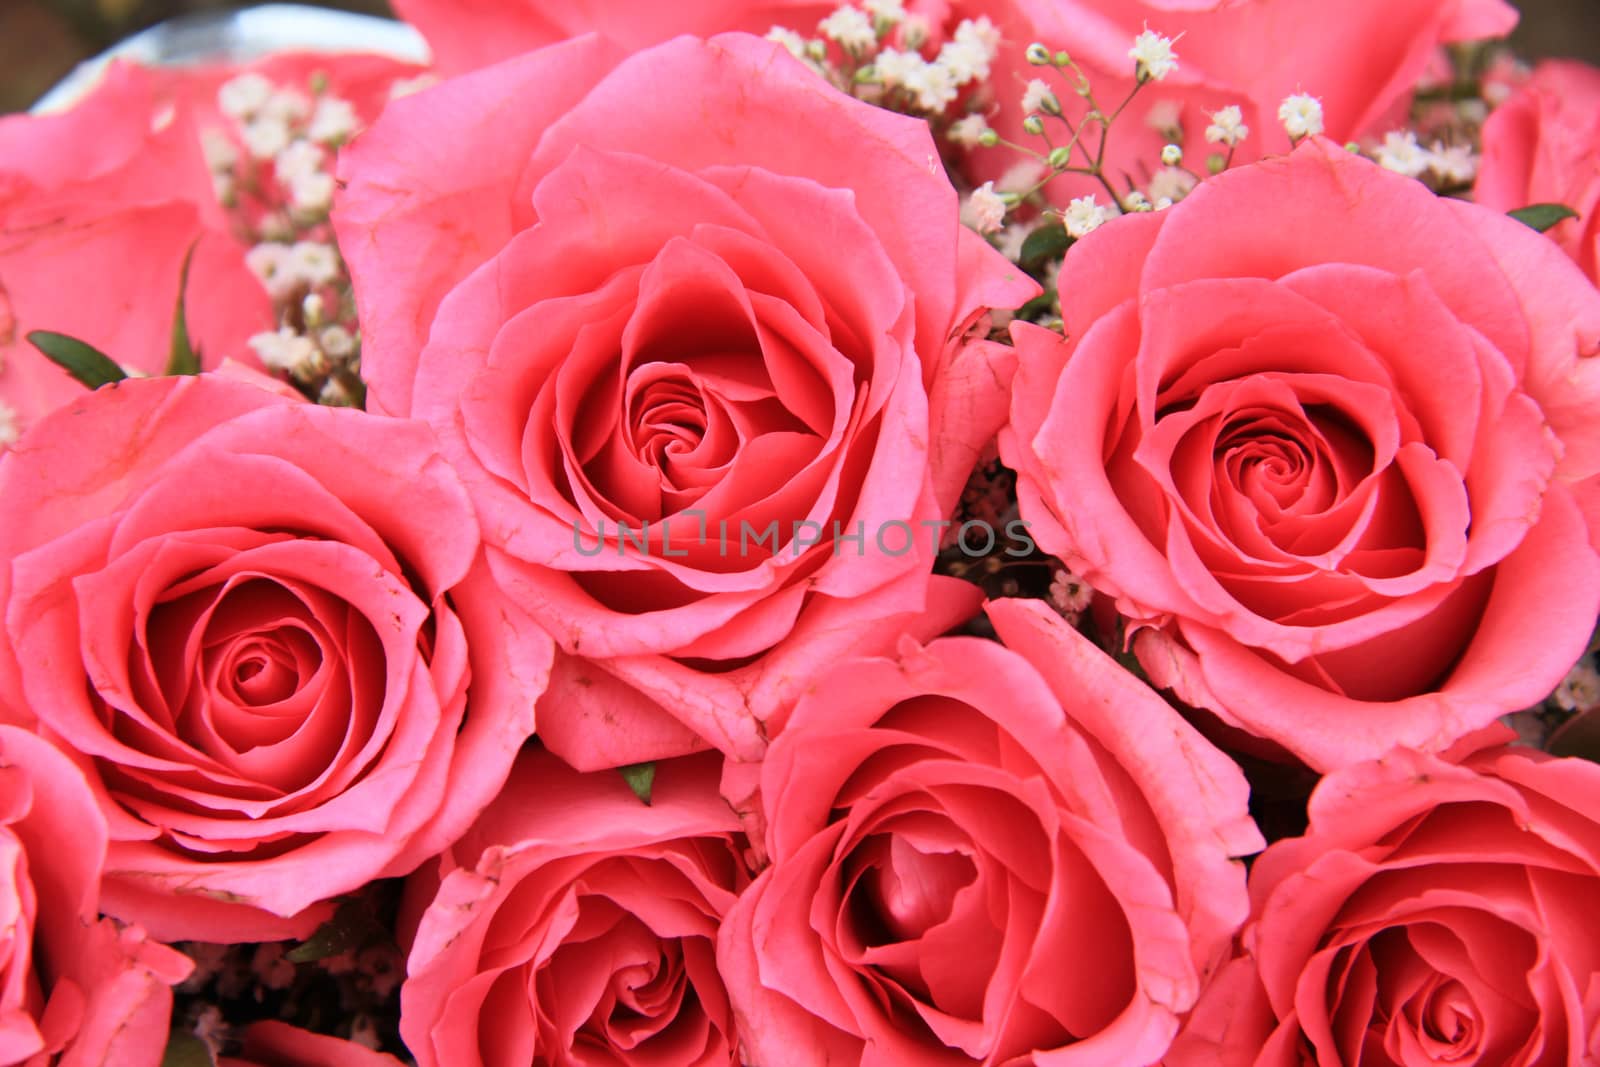 Pink roses in a bridal arrangement by studioportosabbia